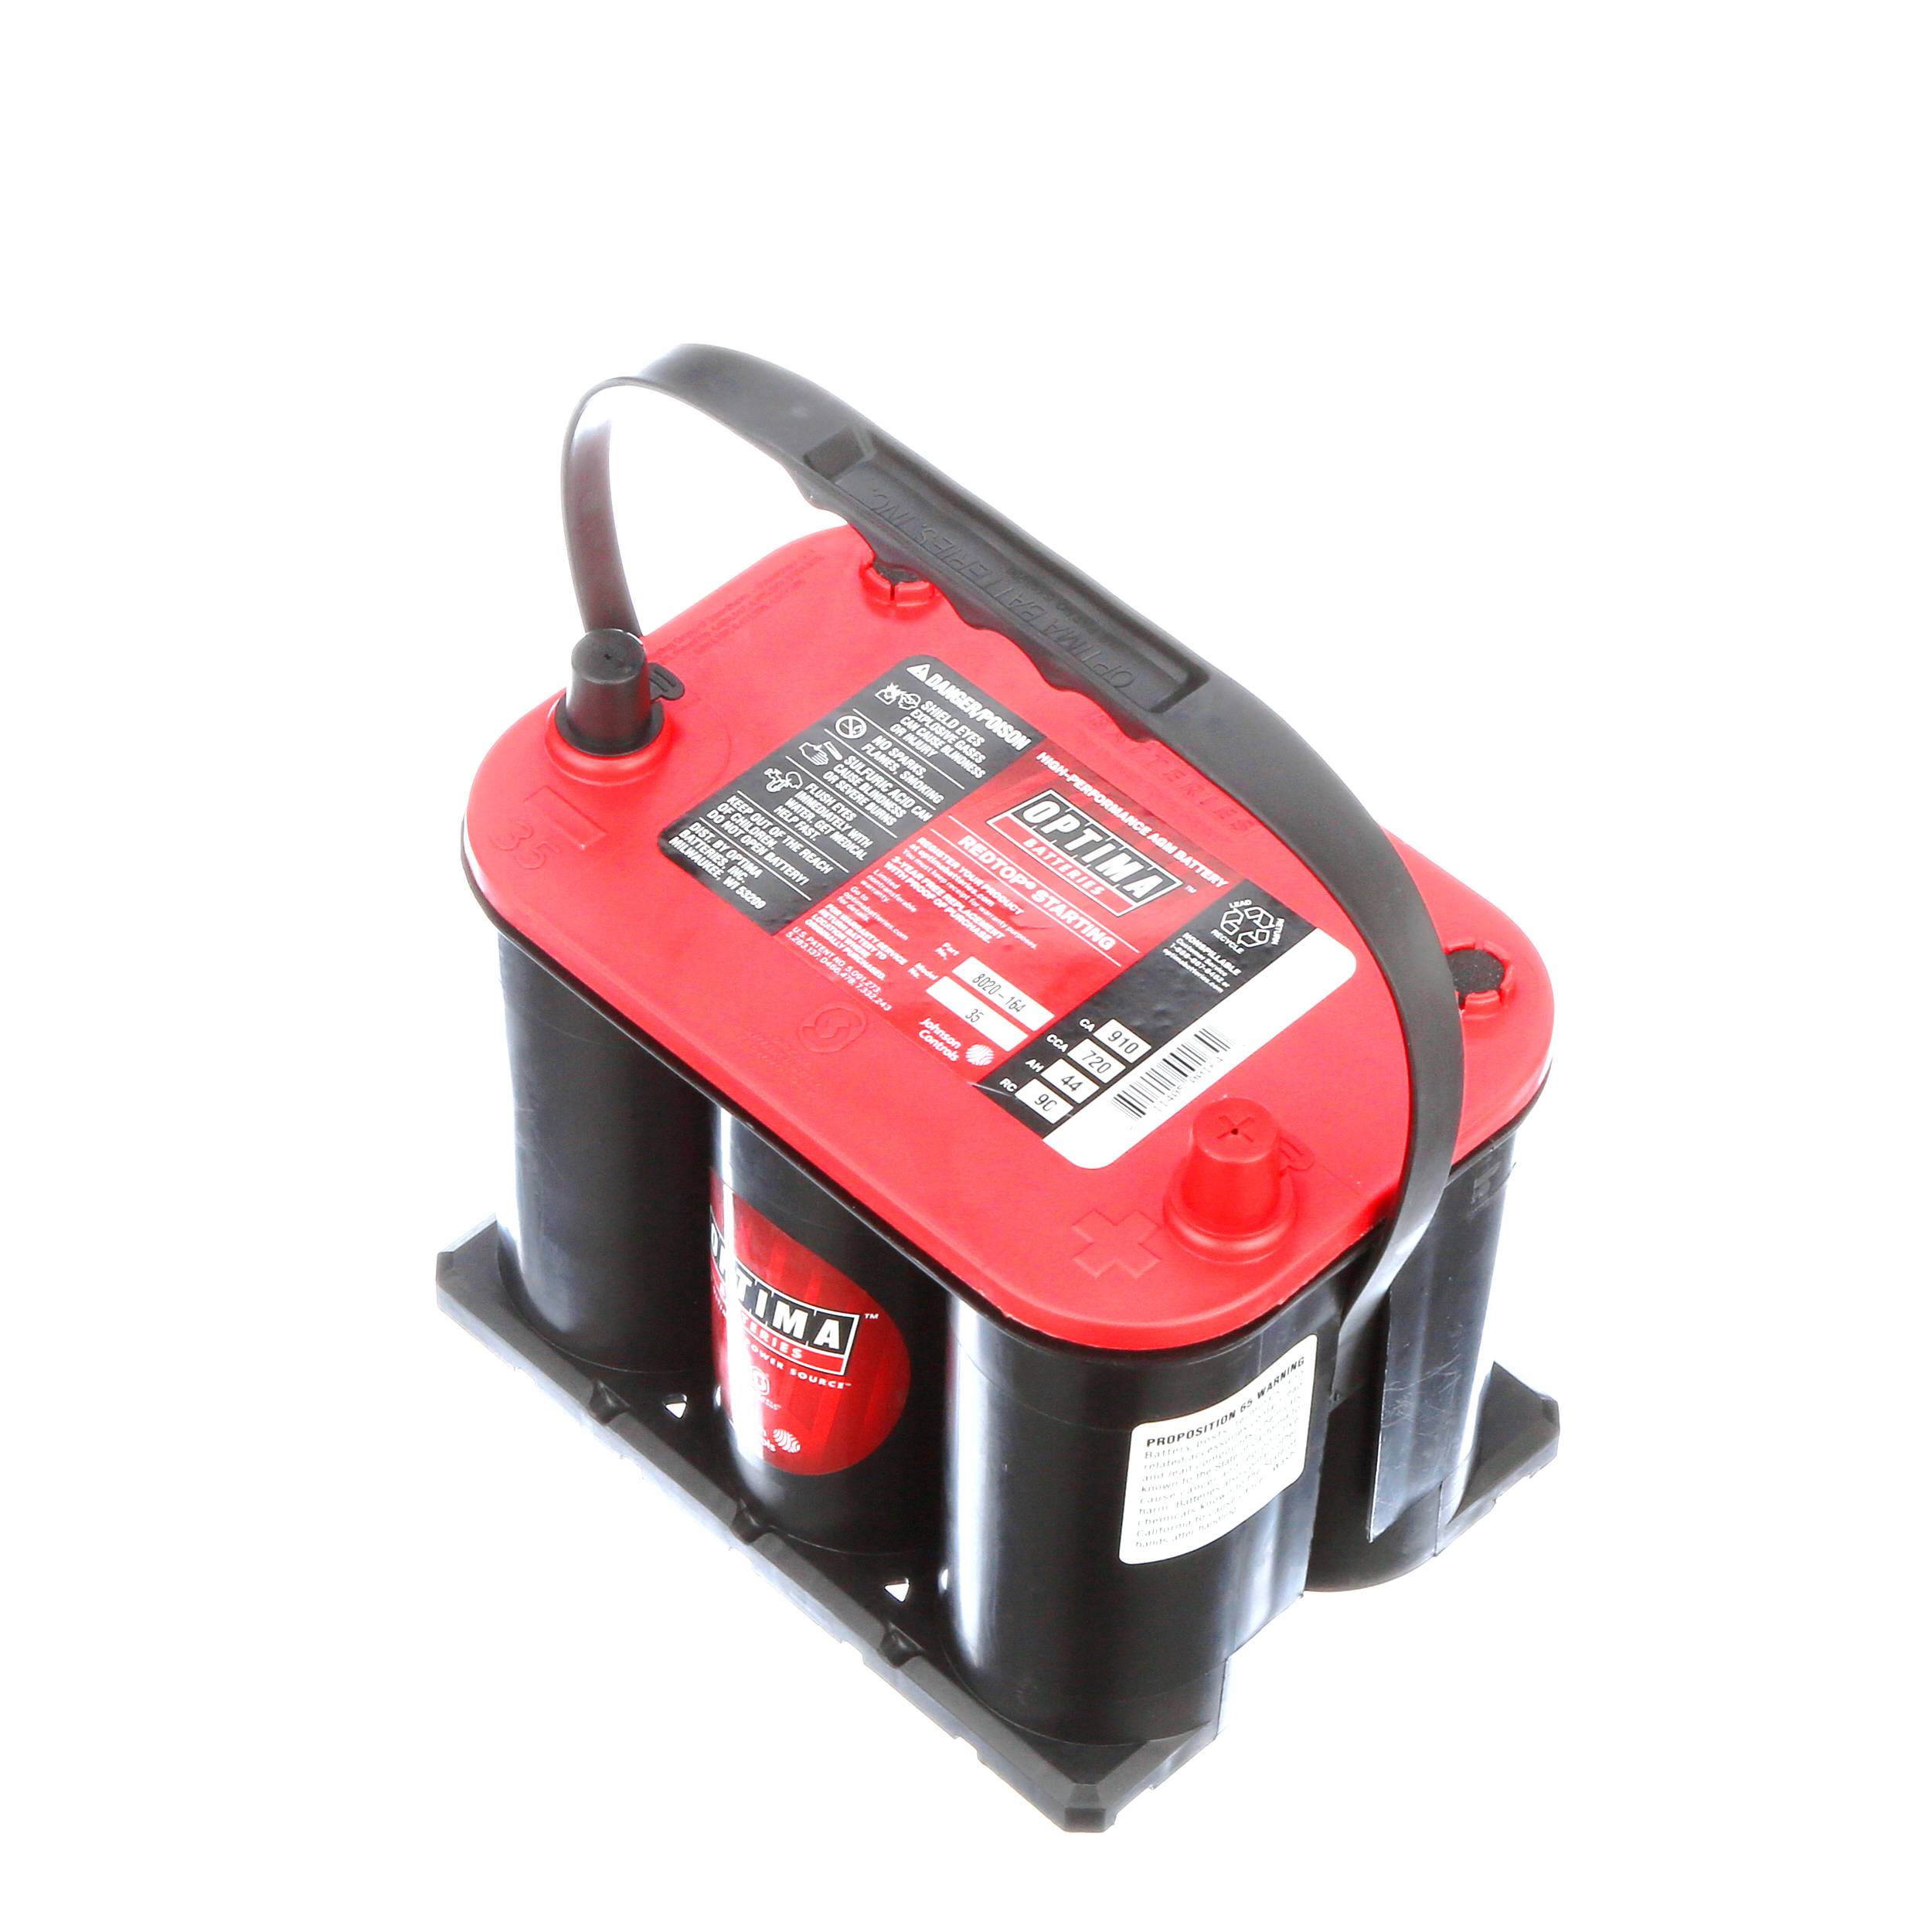 Optima Batteries OPT8020-164 35 RedTop Starting Battery